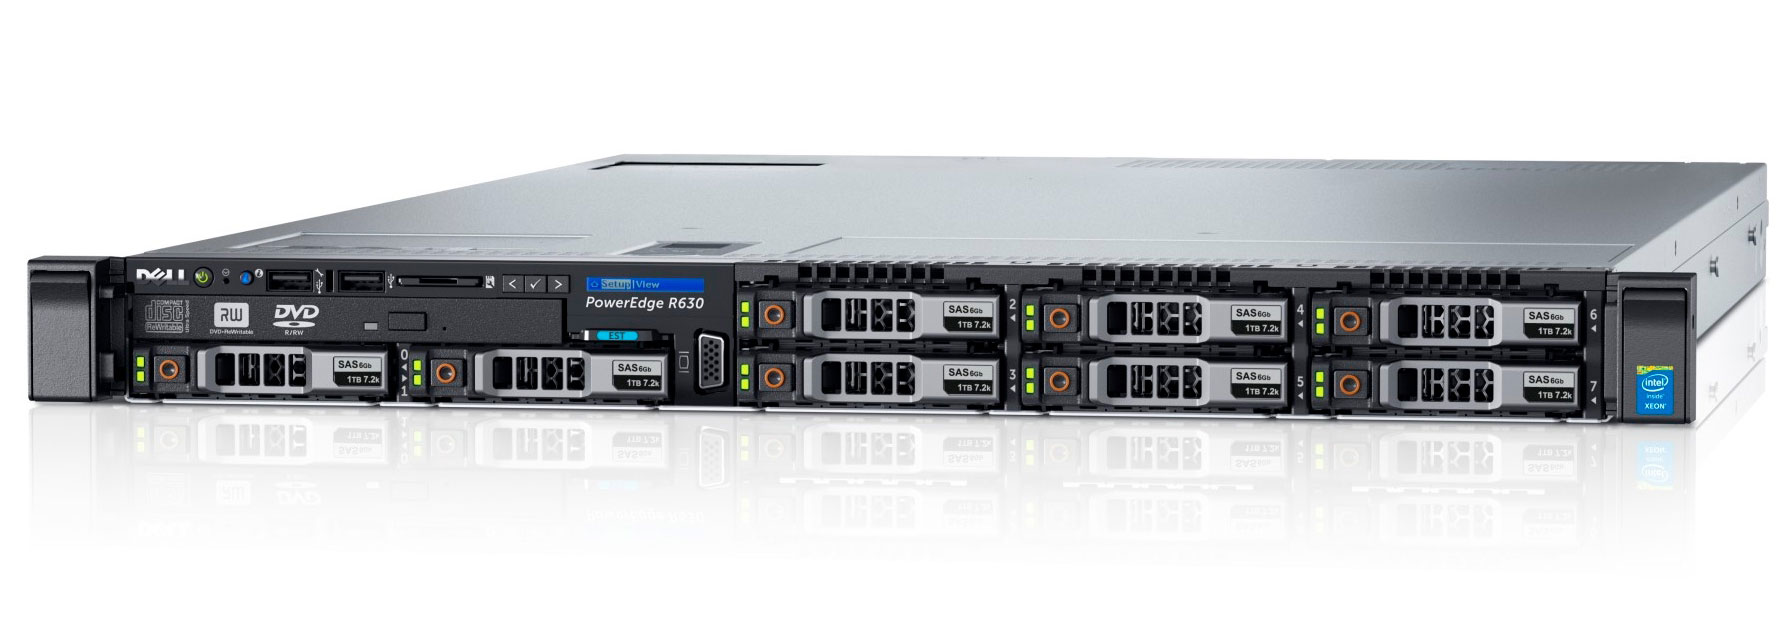 Подробное фото Сервер DELL PowerEdge R630 Xeon 2x E5-2660v3 128Gb 2133P DDR4 8x noHDD 2.5", SAS RAID Perc H730, 1024Mb, DVD, 2*PSU